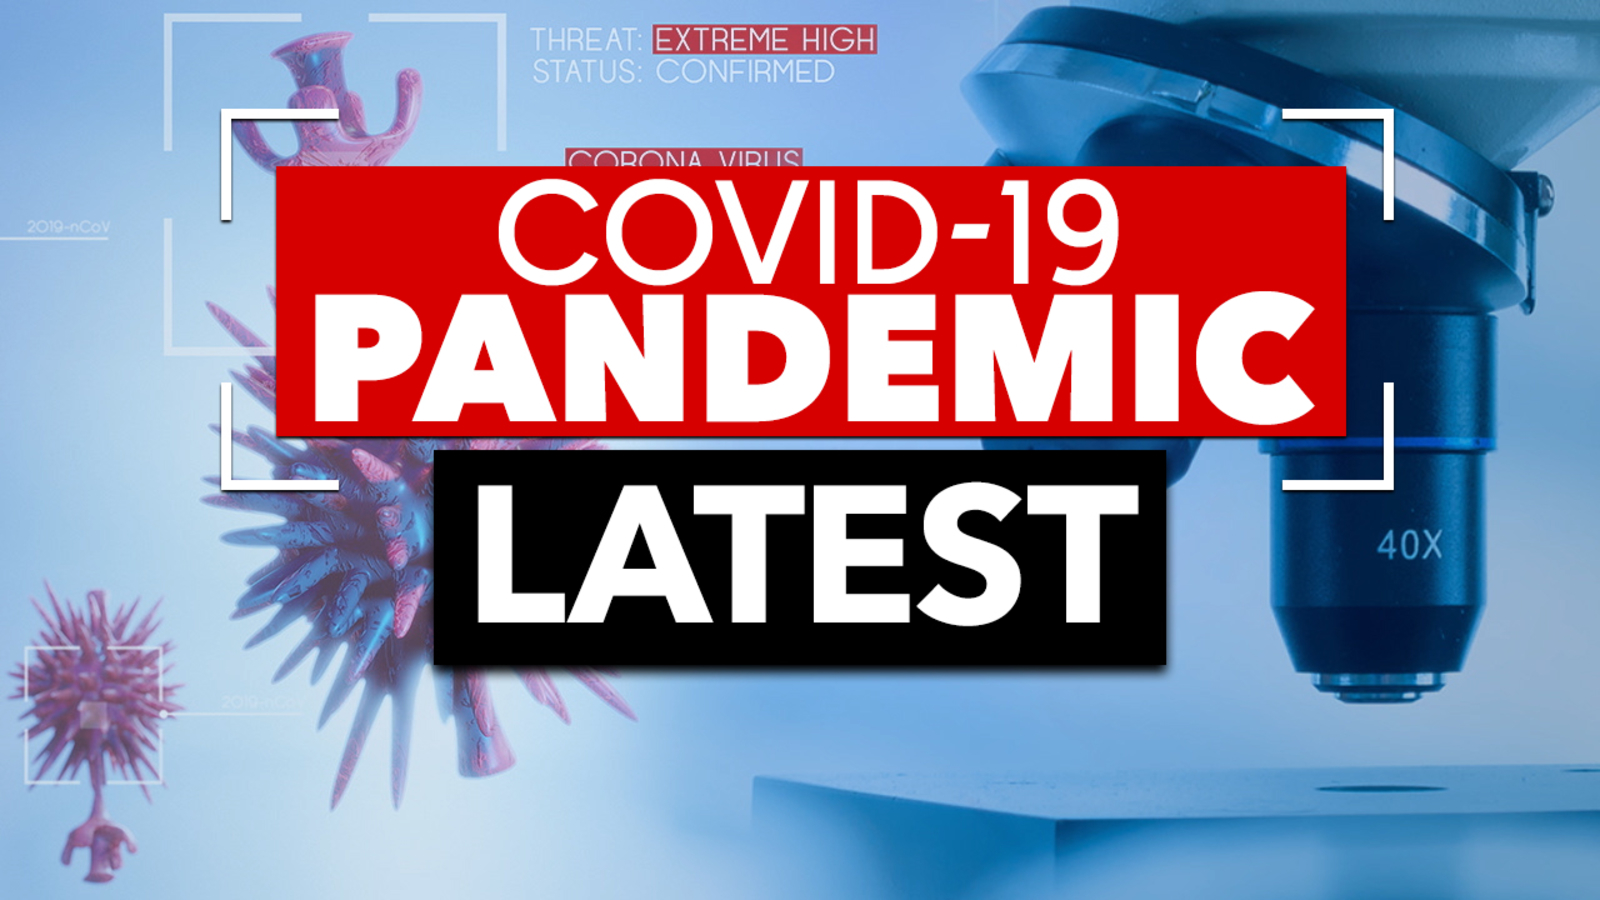 NC Corona virus update October 26: Elon University handles COVID-19 clusters, free trial in Orange, Satham County